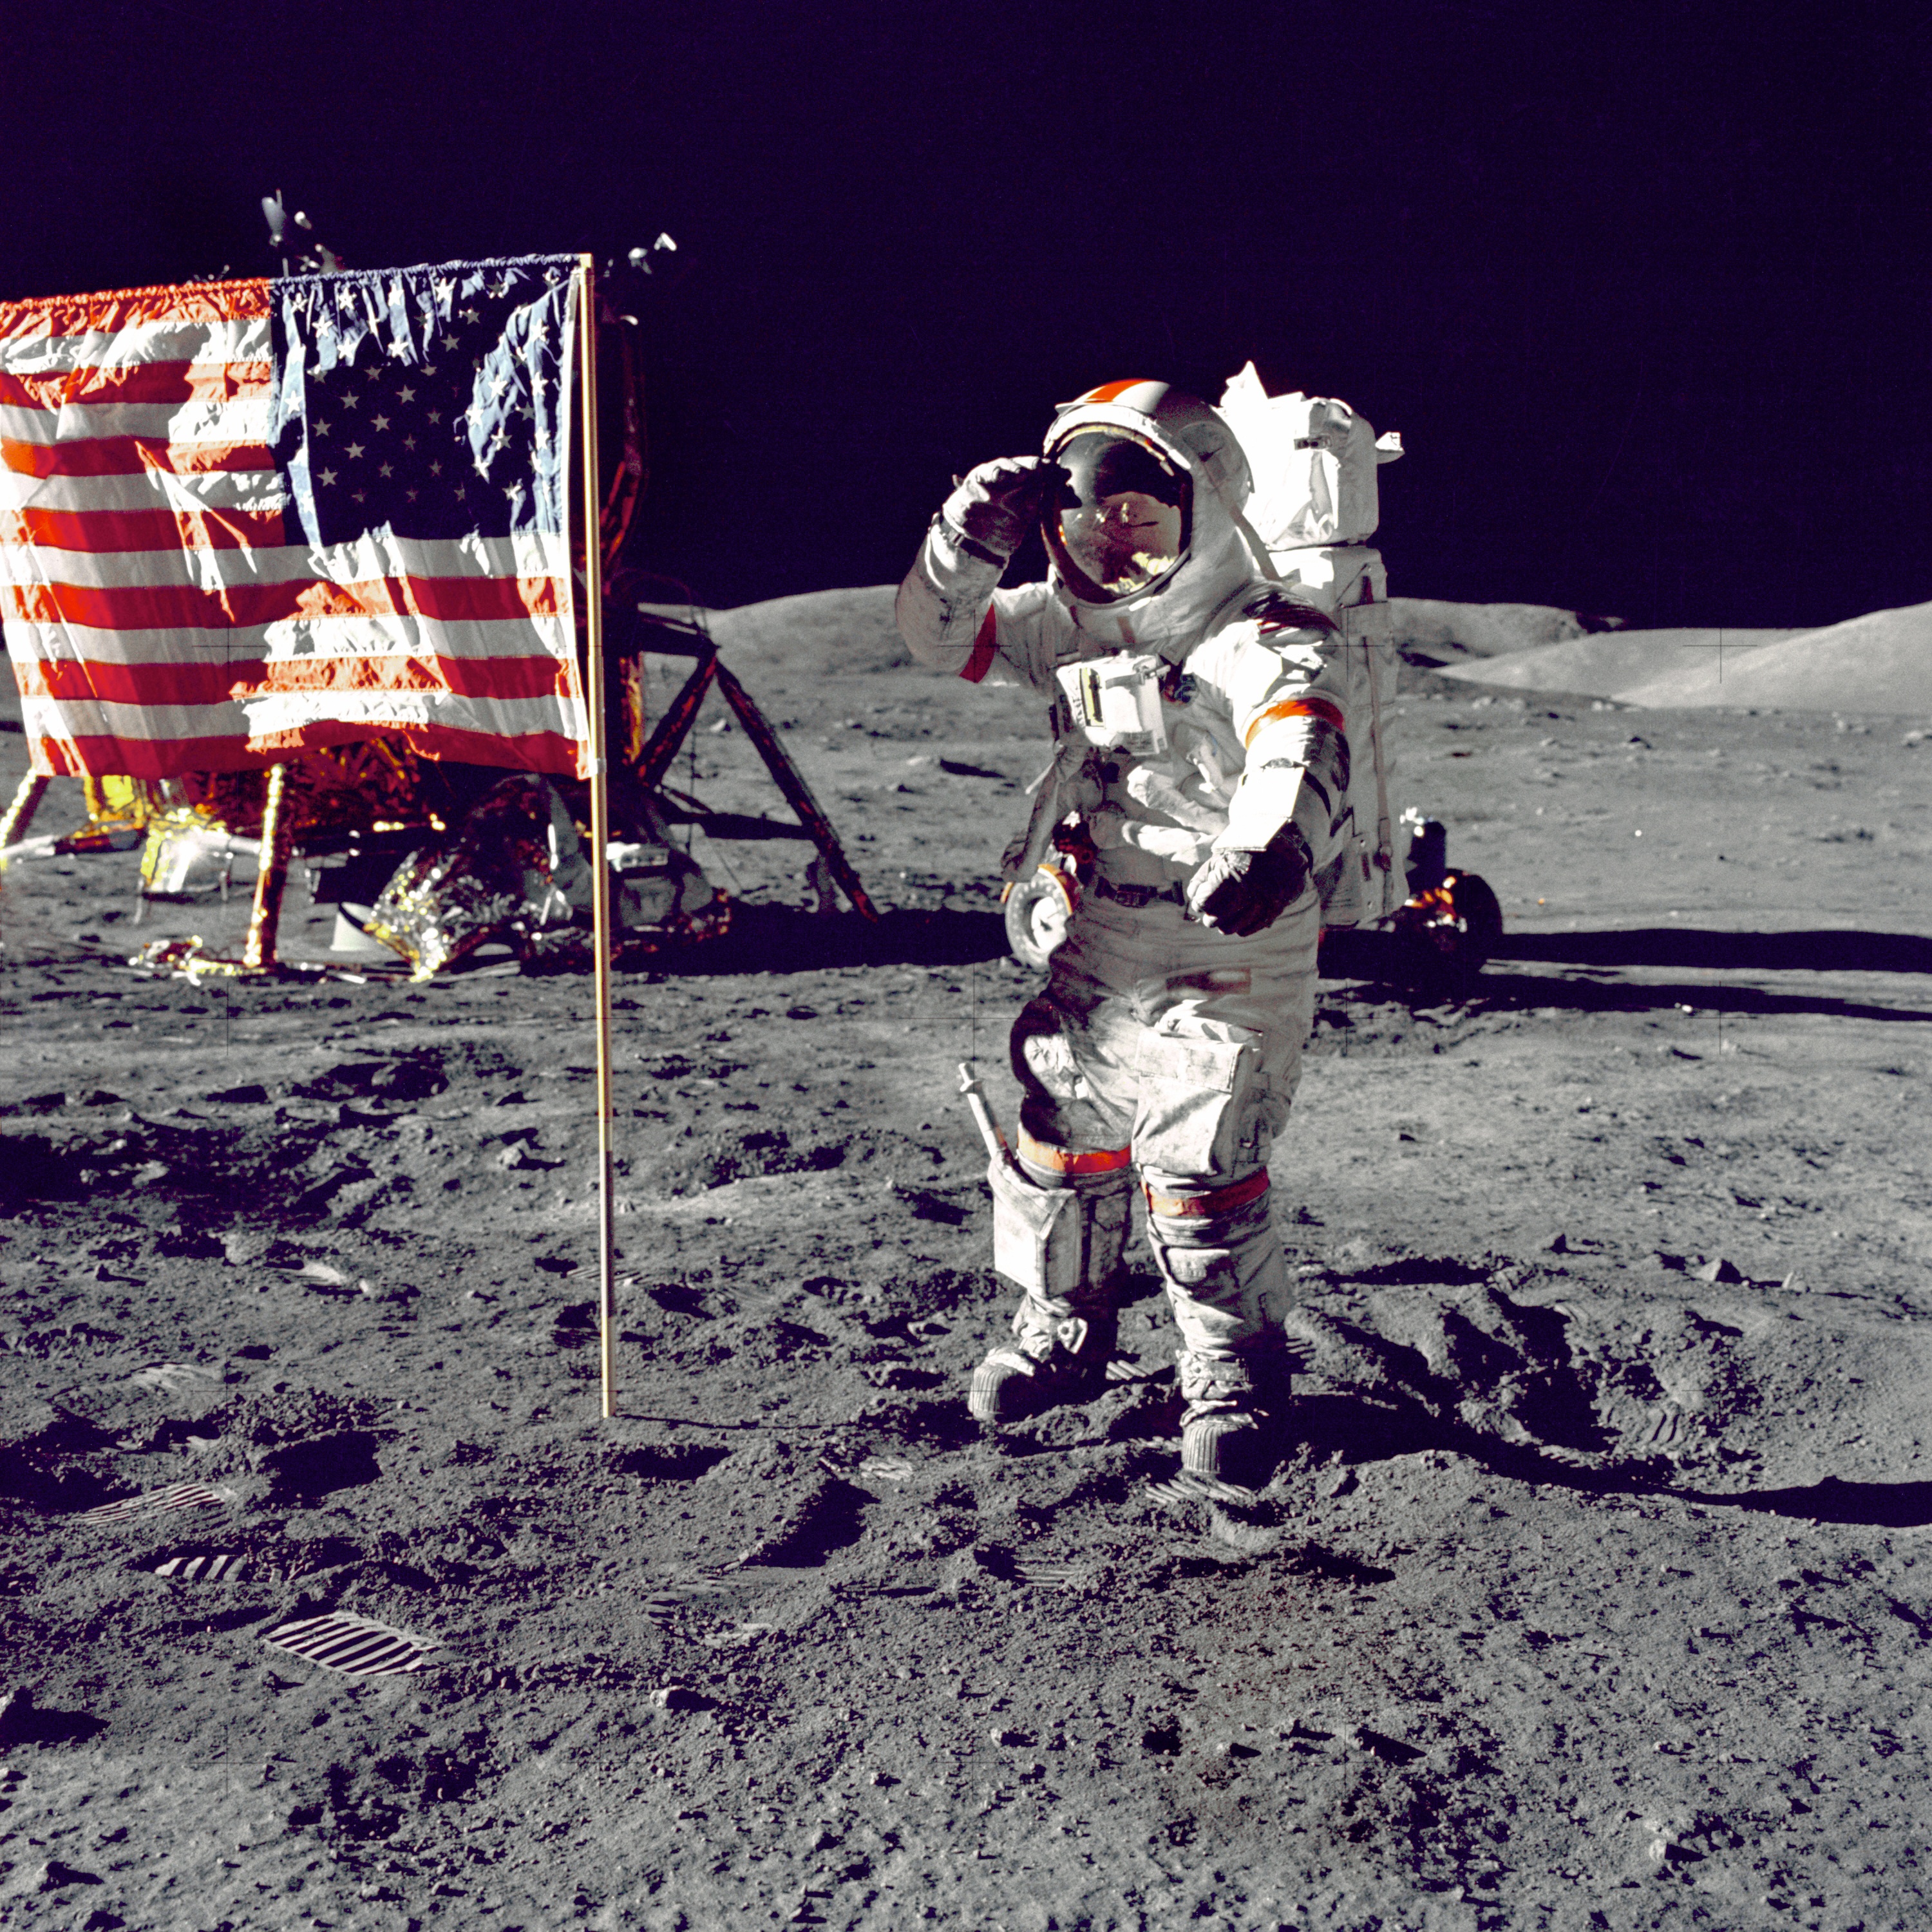 Moon landing photo